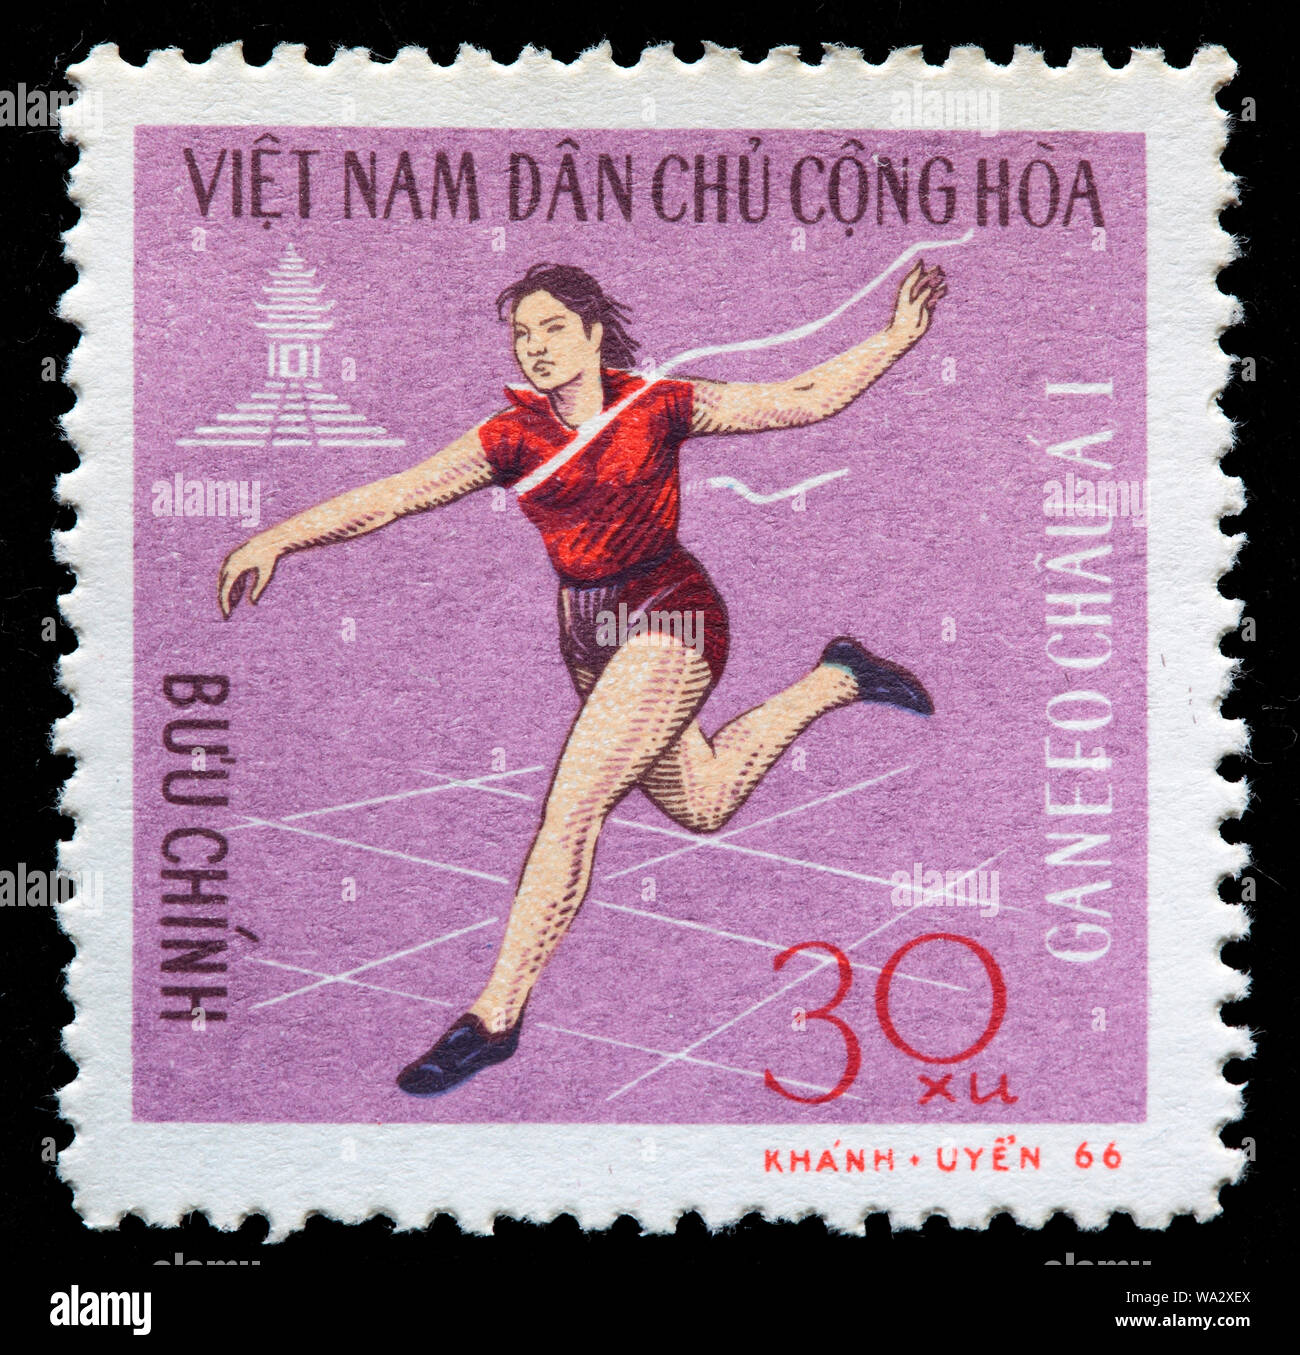 Running, GANEFO Asian Games, postage stamp, Vietnam, 1966 Stock Photo